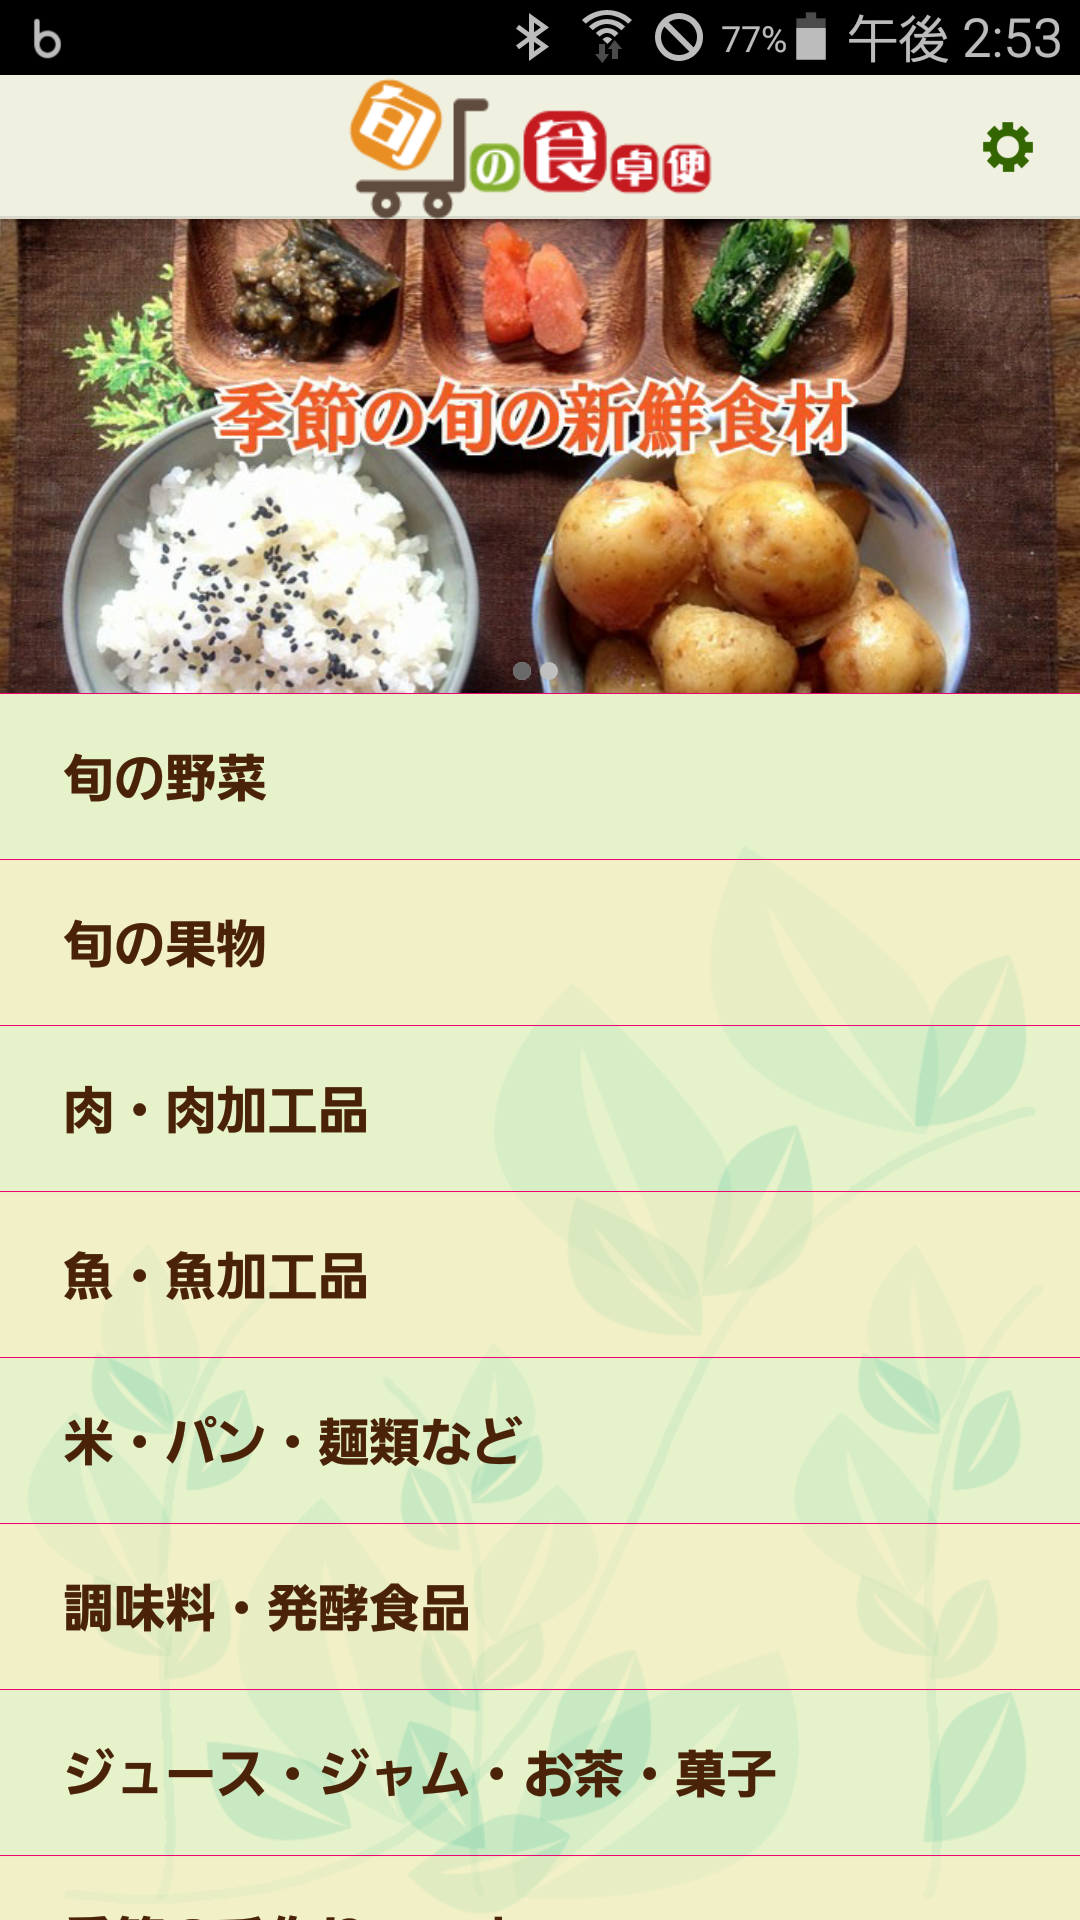 Android application 旬の食卓便　旬の食材でおいしく健康に！ screenshort